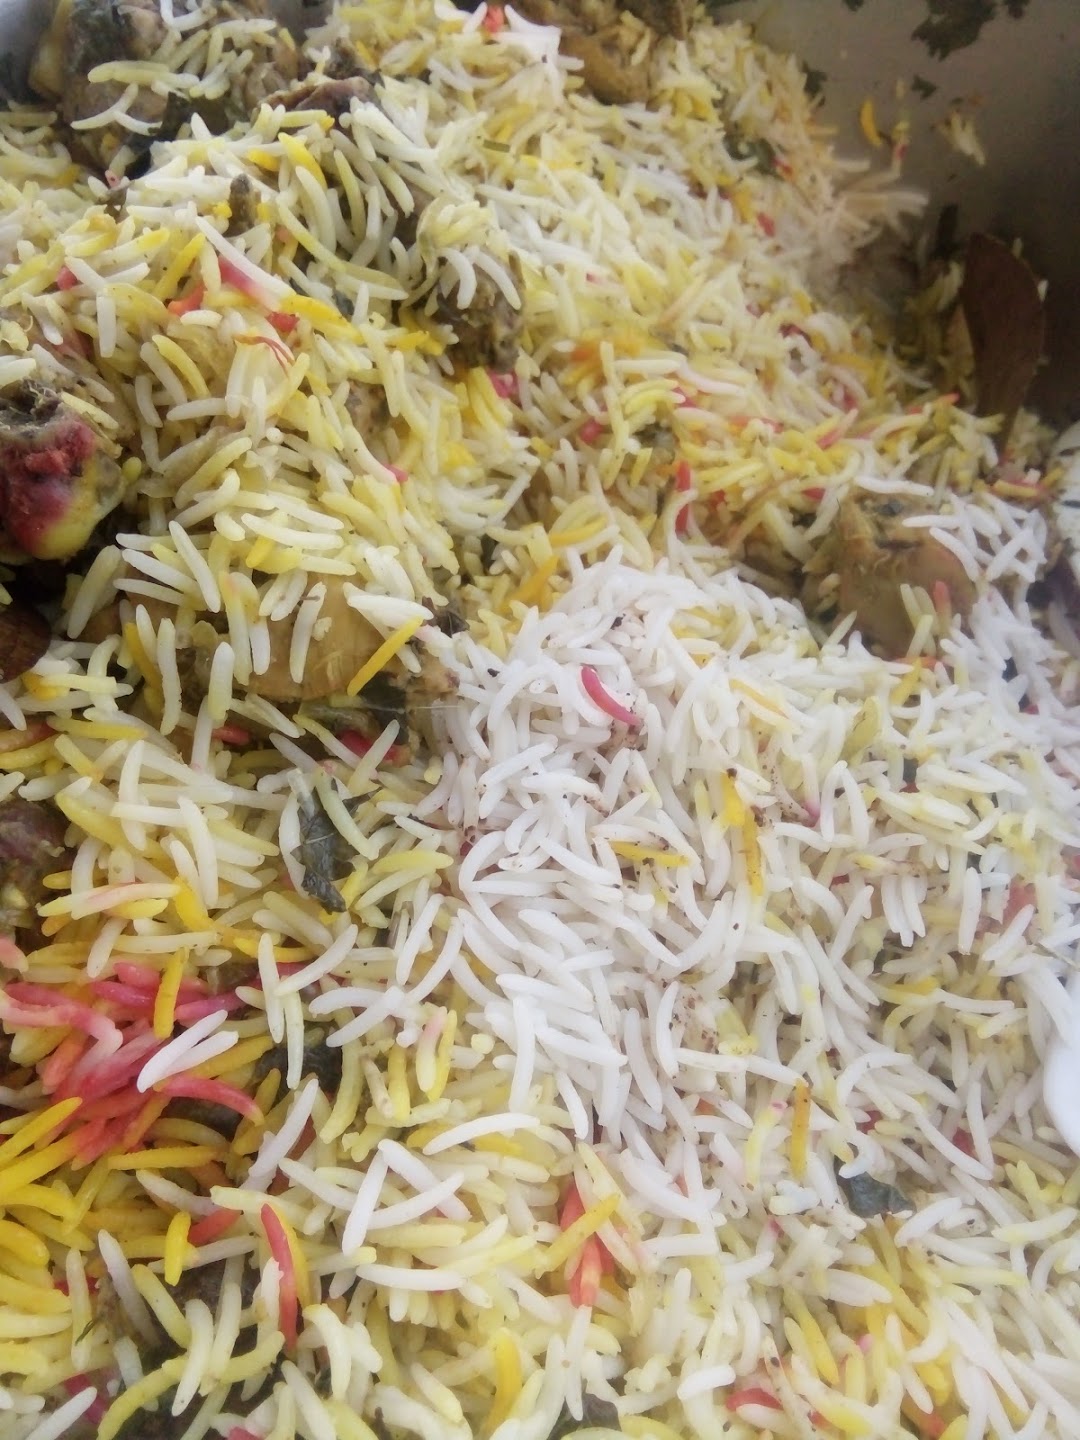 Loyalpur chicken biryani